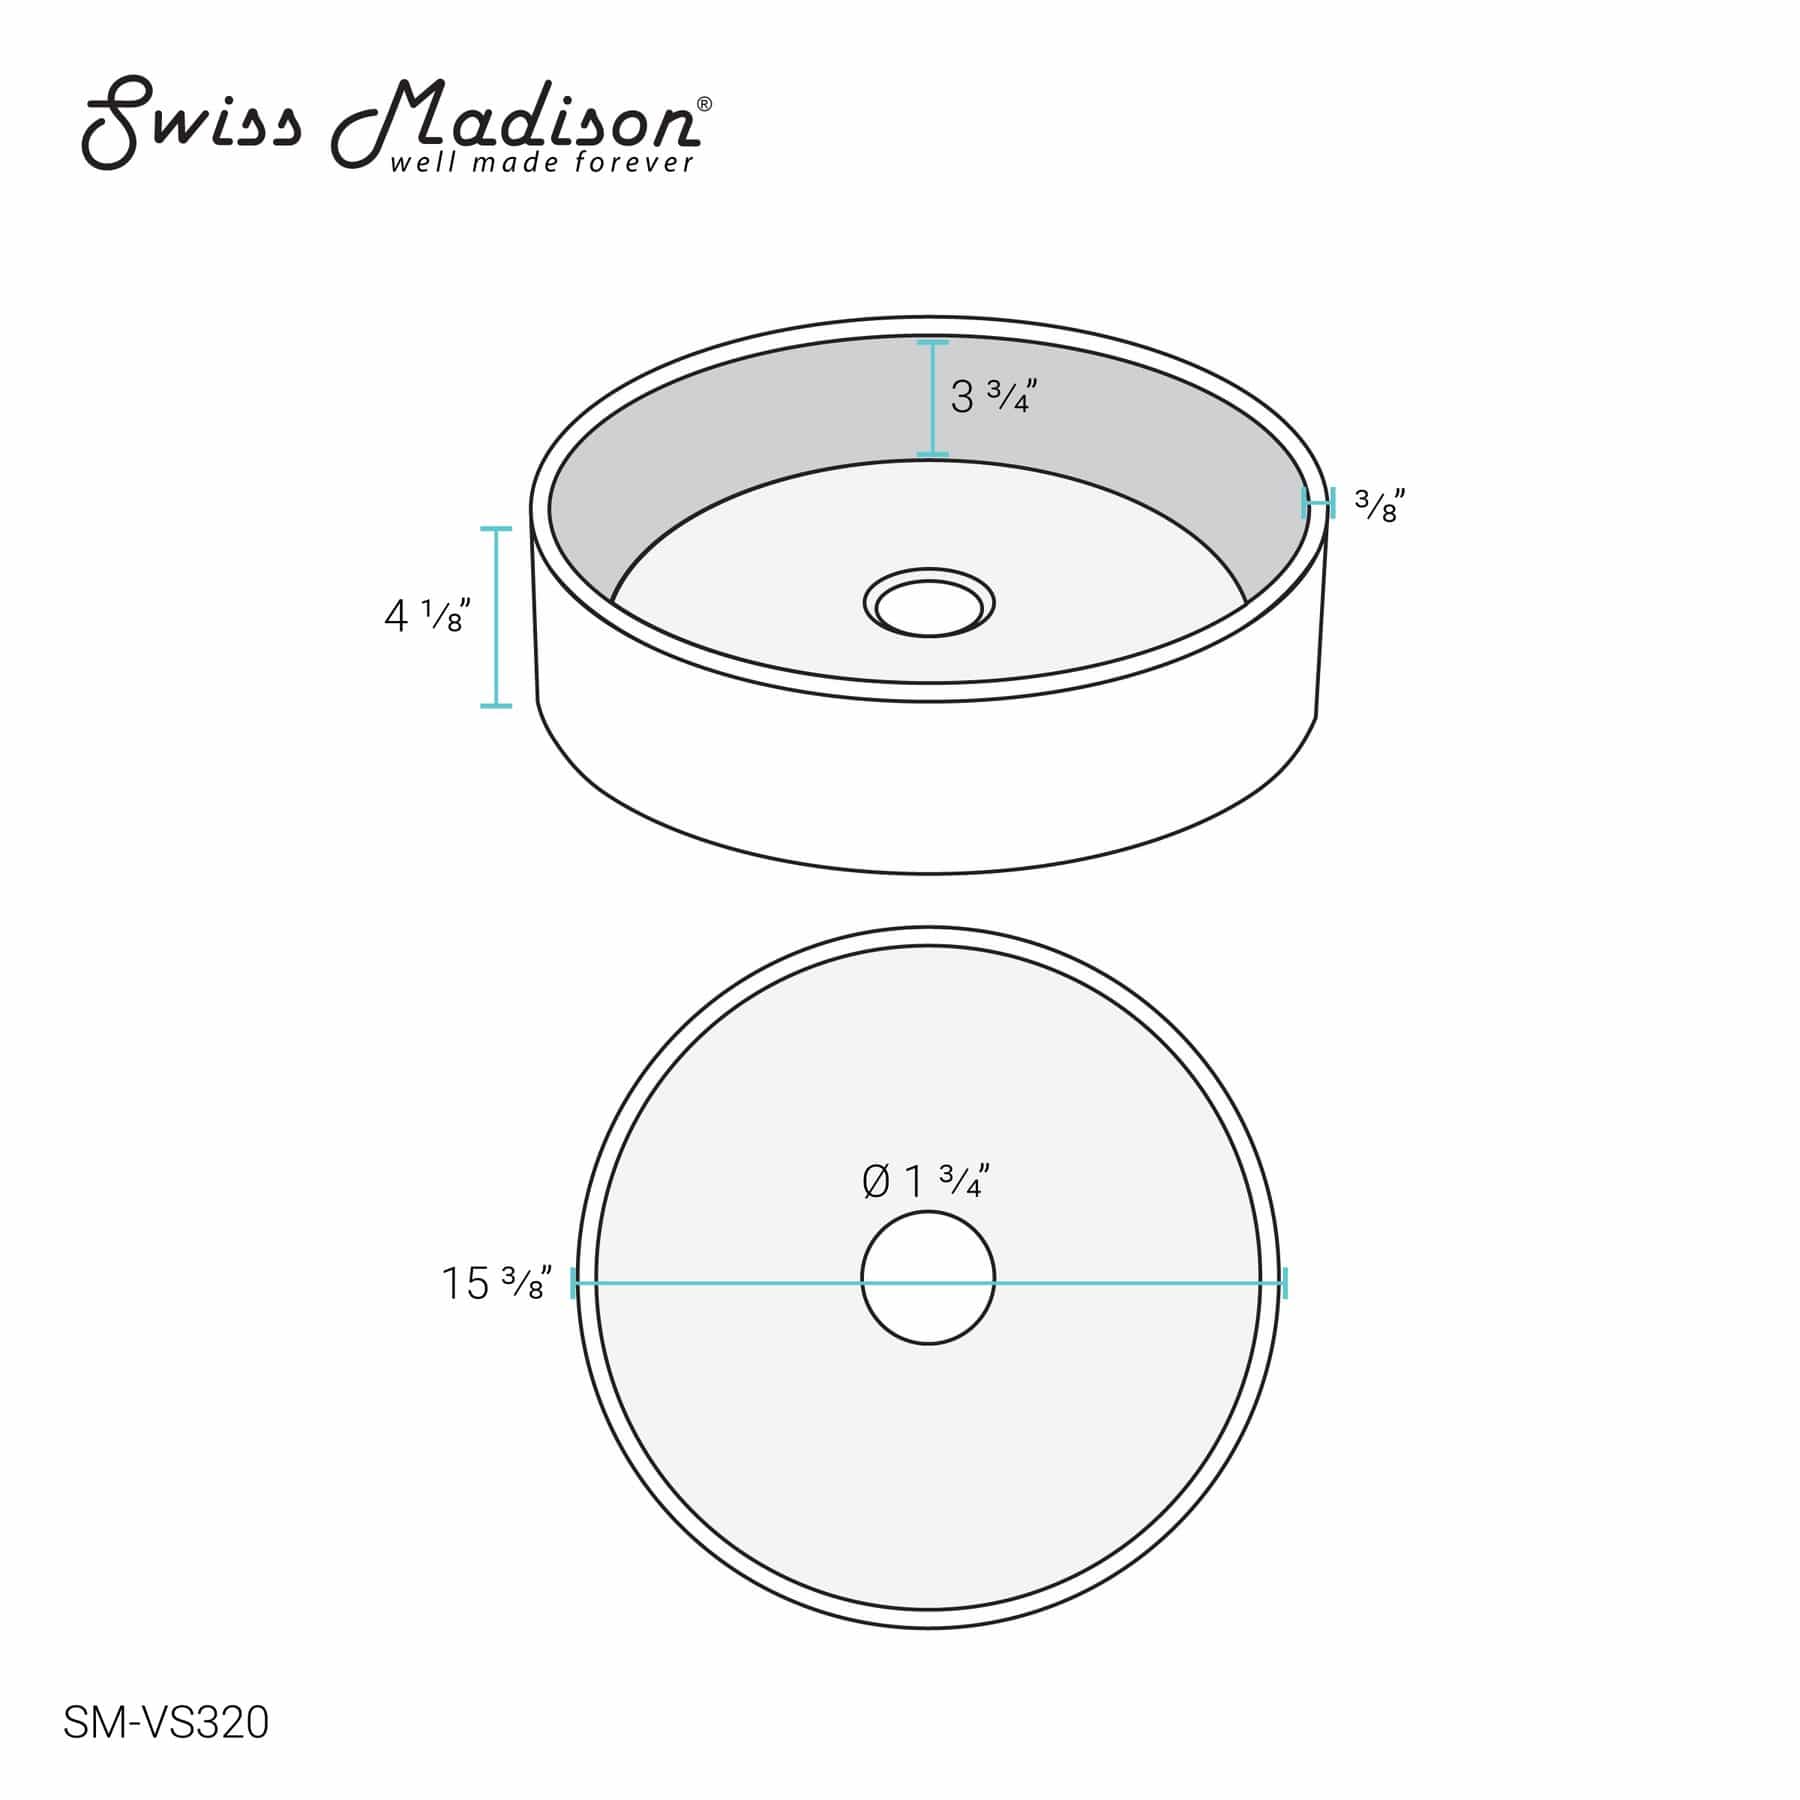 Swiss Madison Cache 15.75" Round Glass Vessel Sink - SM-VS320 - Molaix723552143710AccessoriesSM-VS320